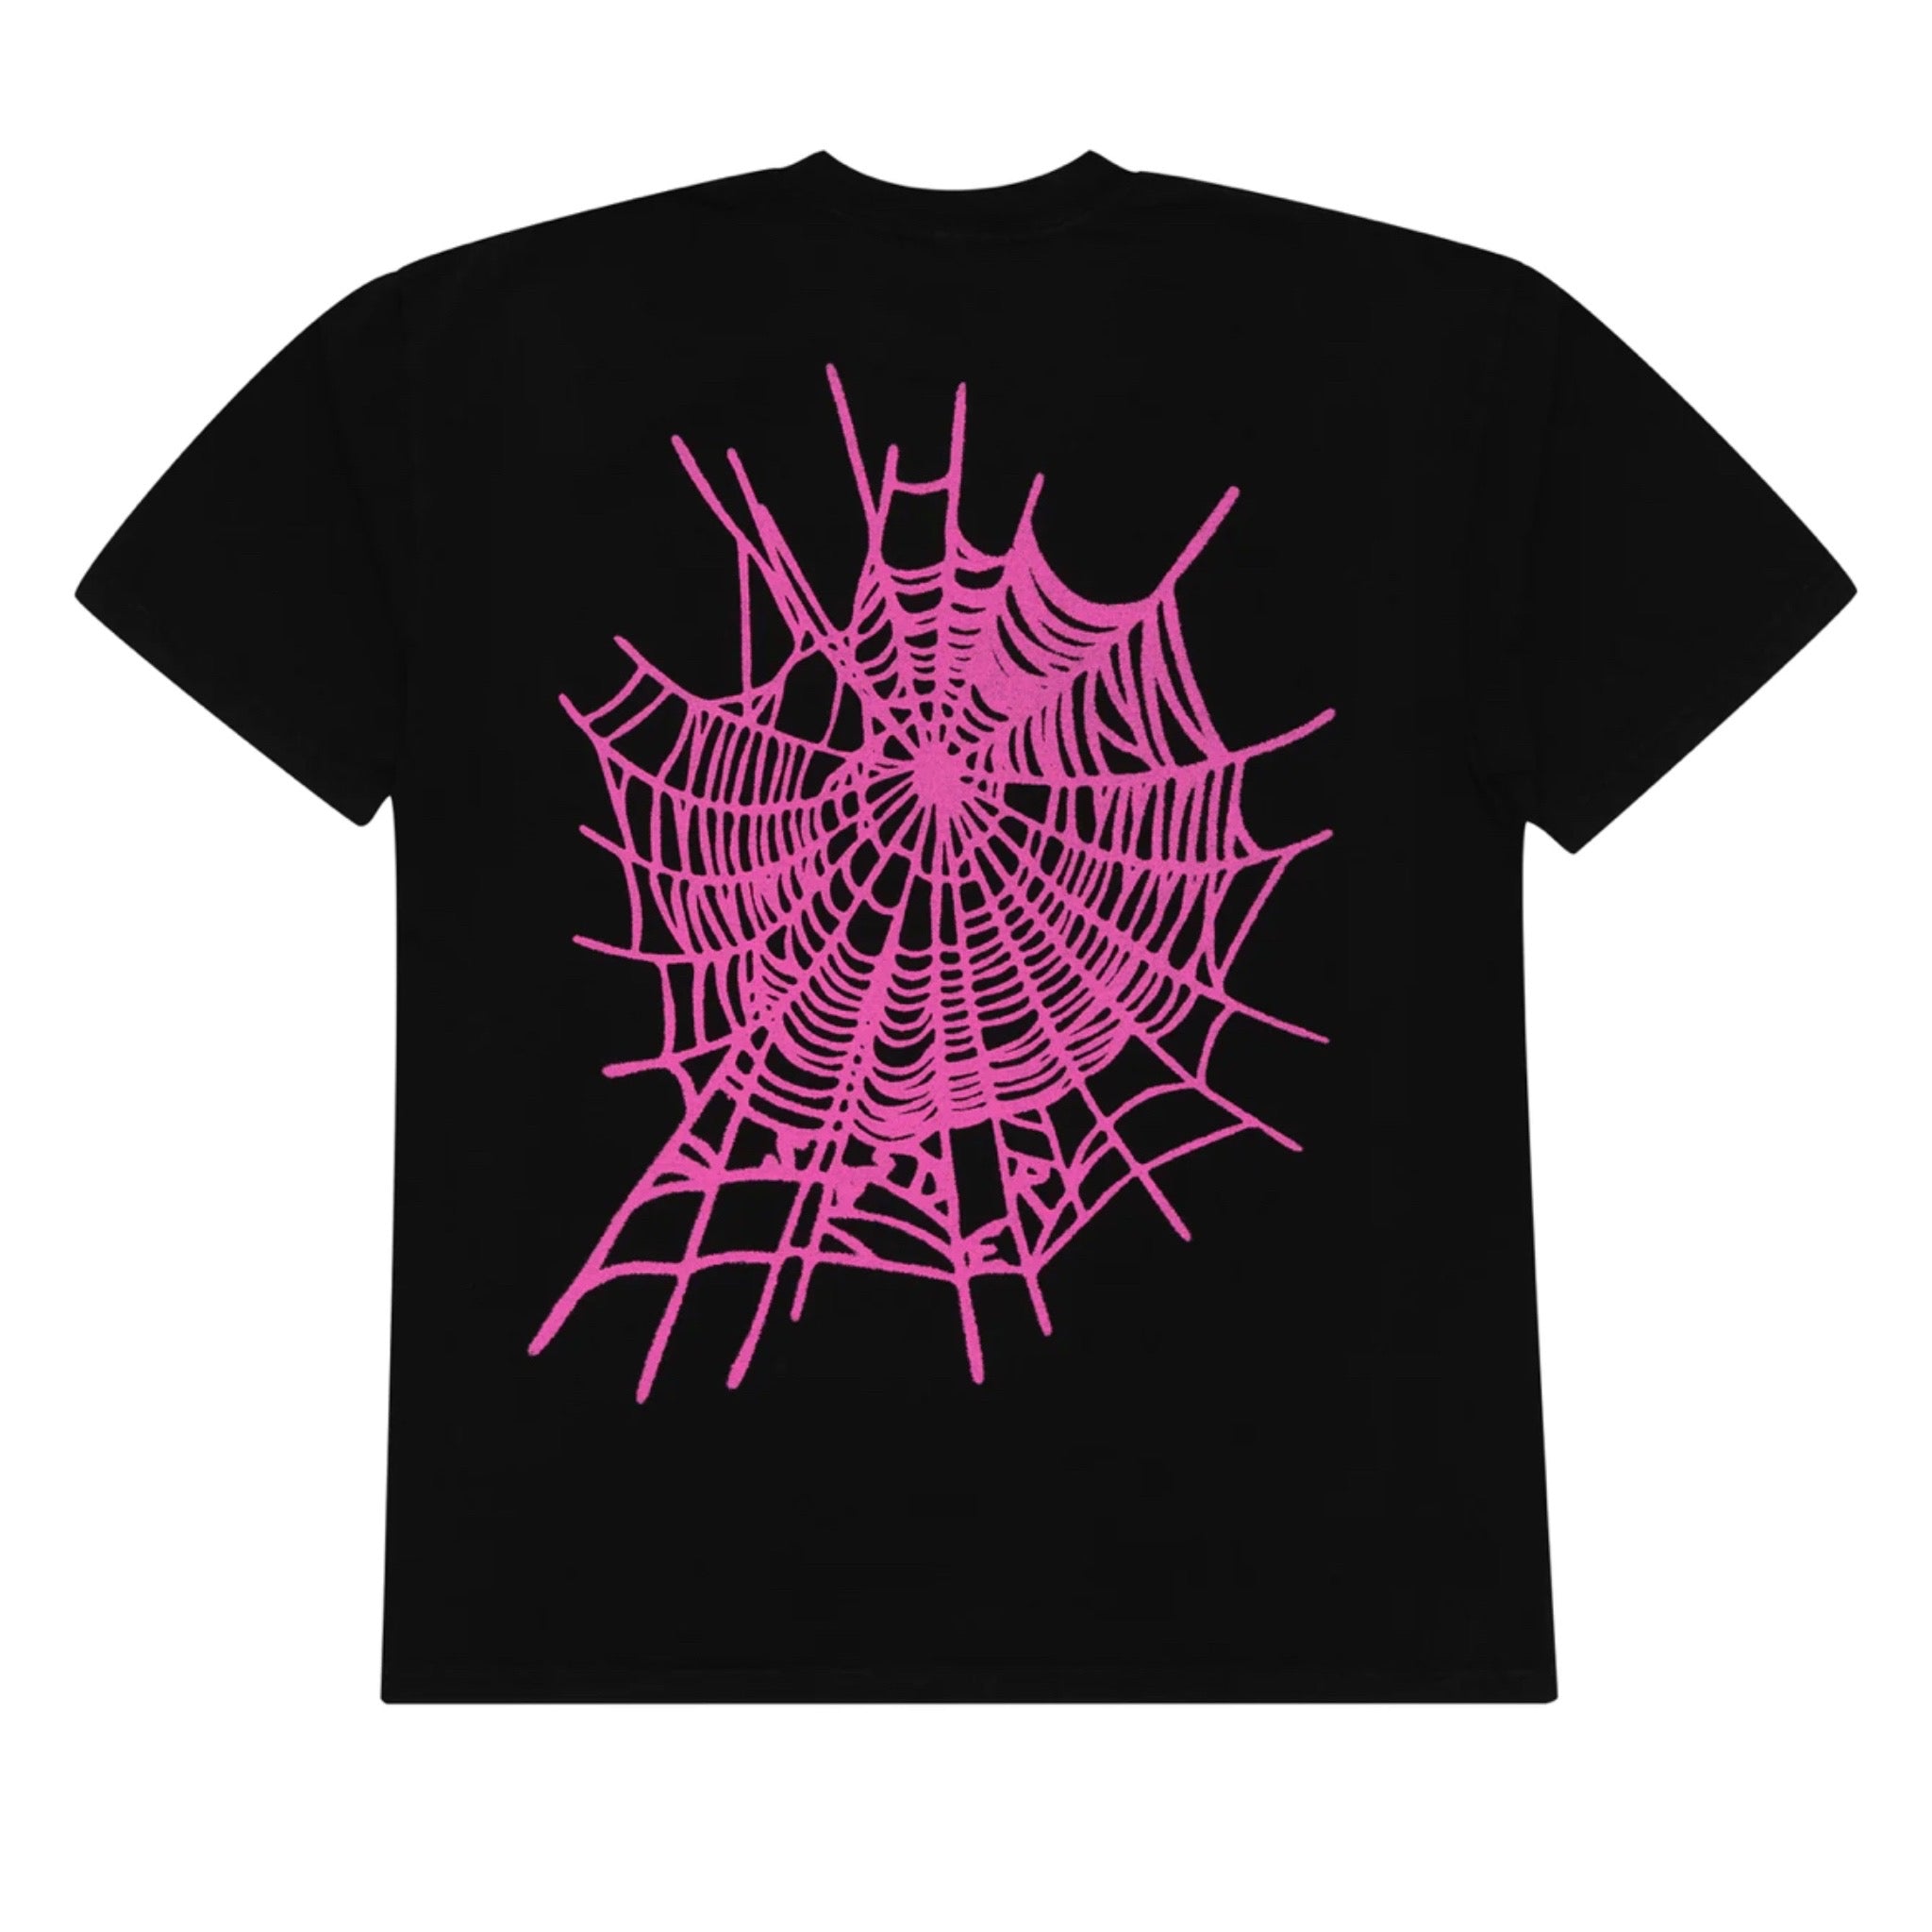 Sp5der Worldwide Web Shirt - Black/Pink Graphic Shirt